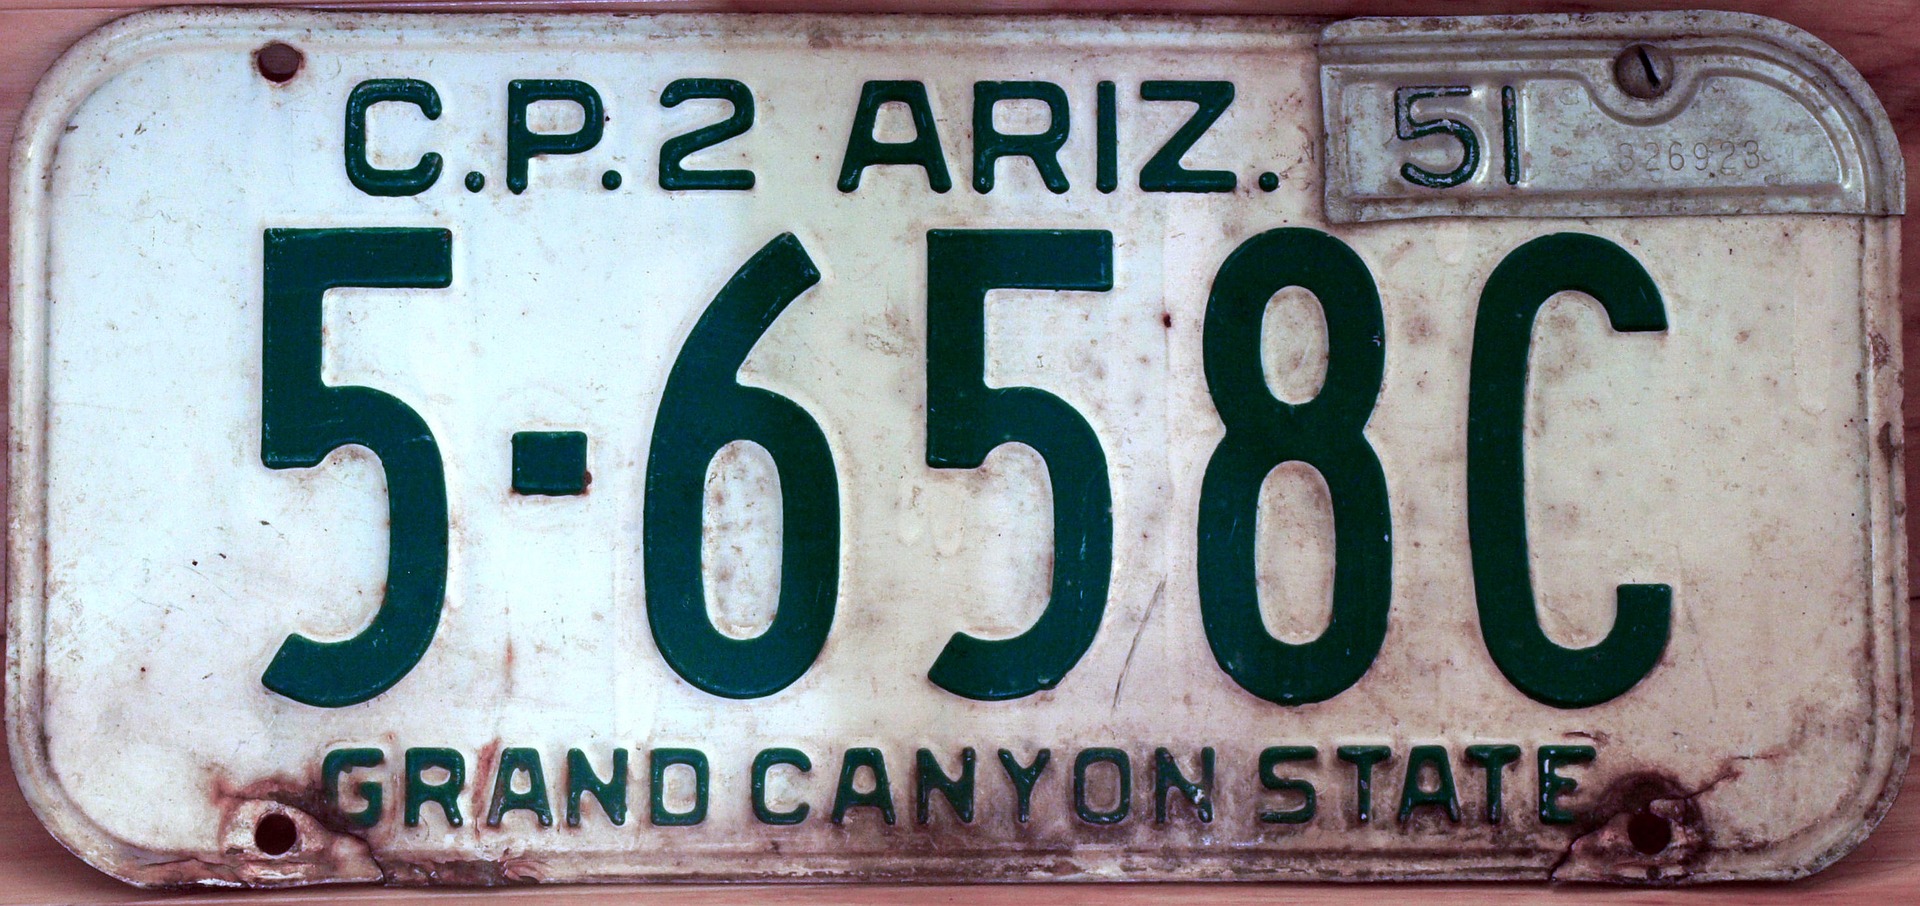 Arizona license plate